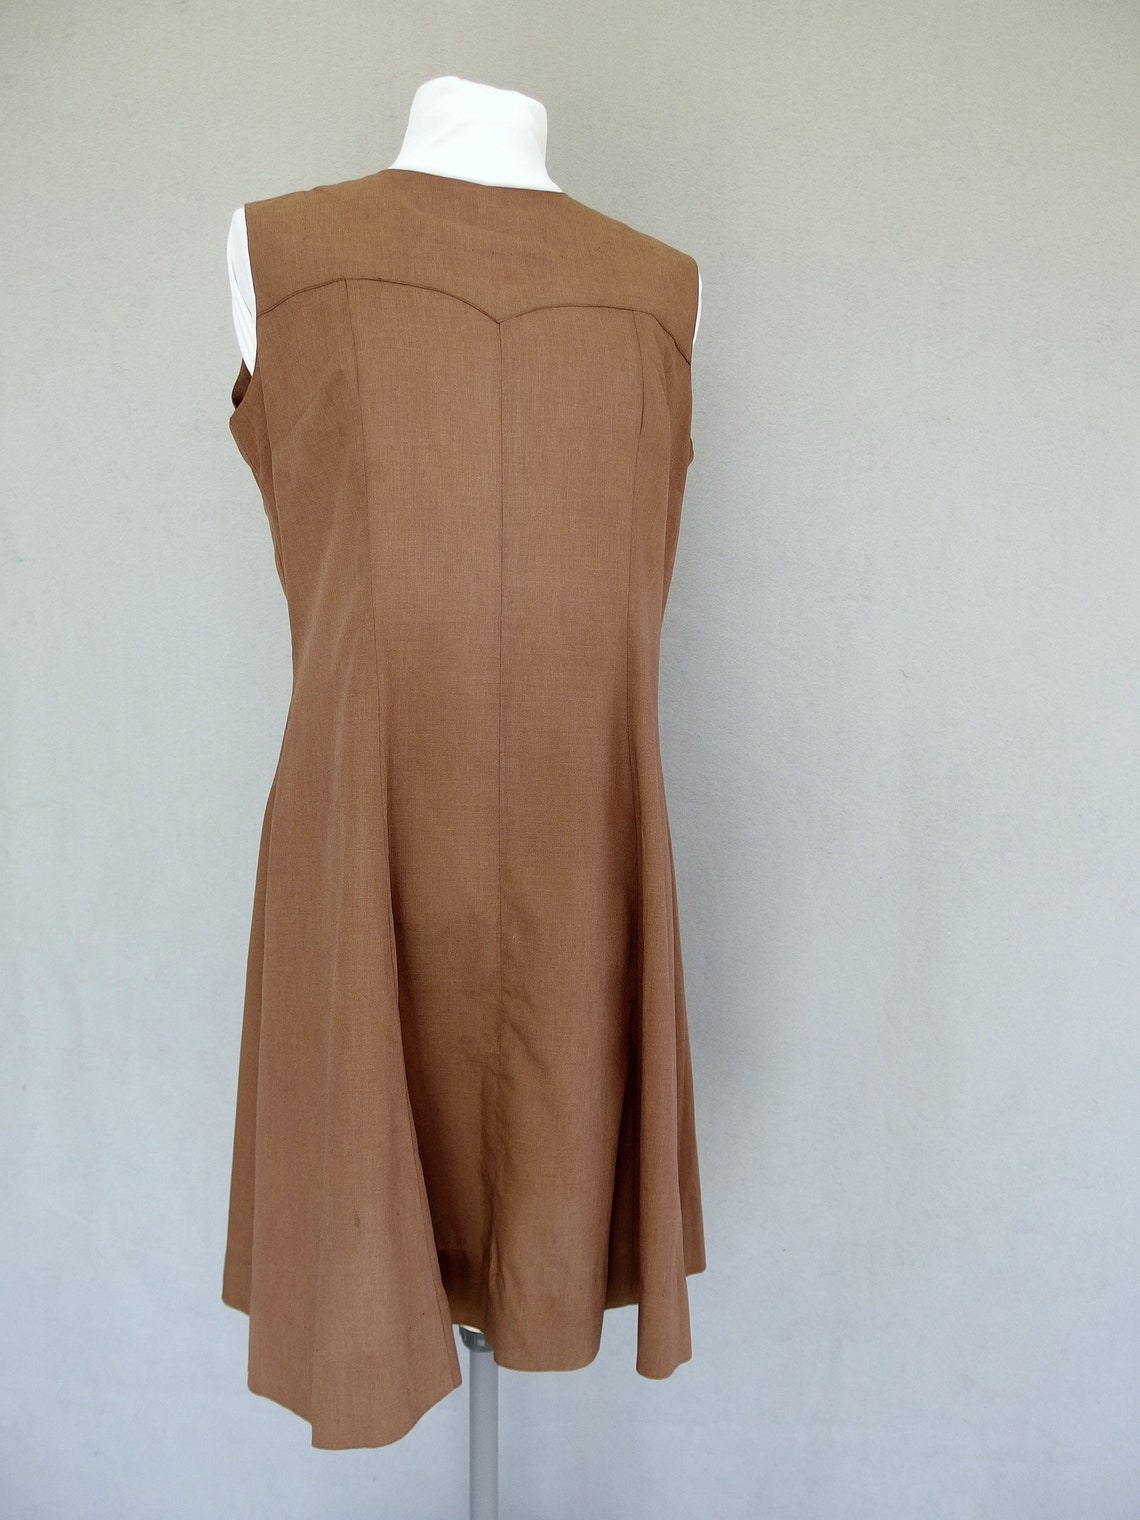 Sleeveless Brown Dress Vintage 1970's Sheath Modern Size | Etsy